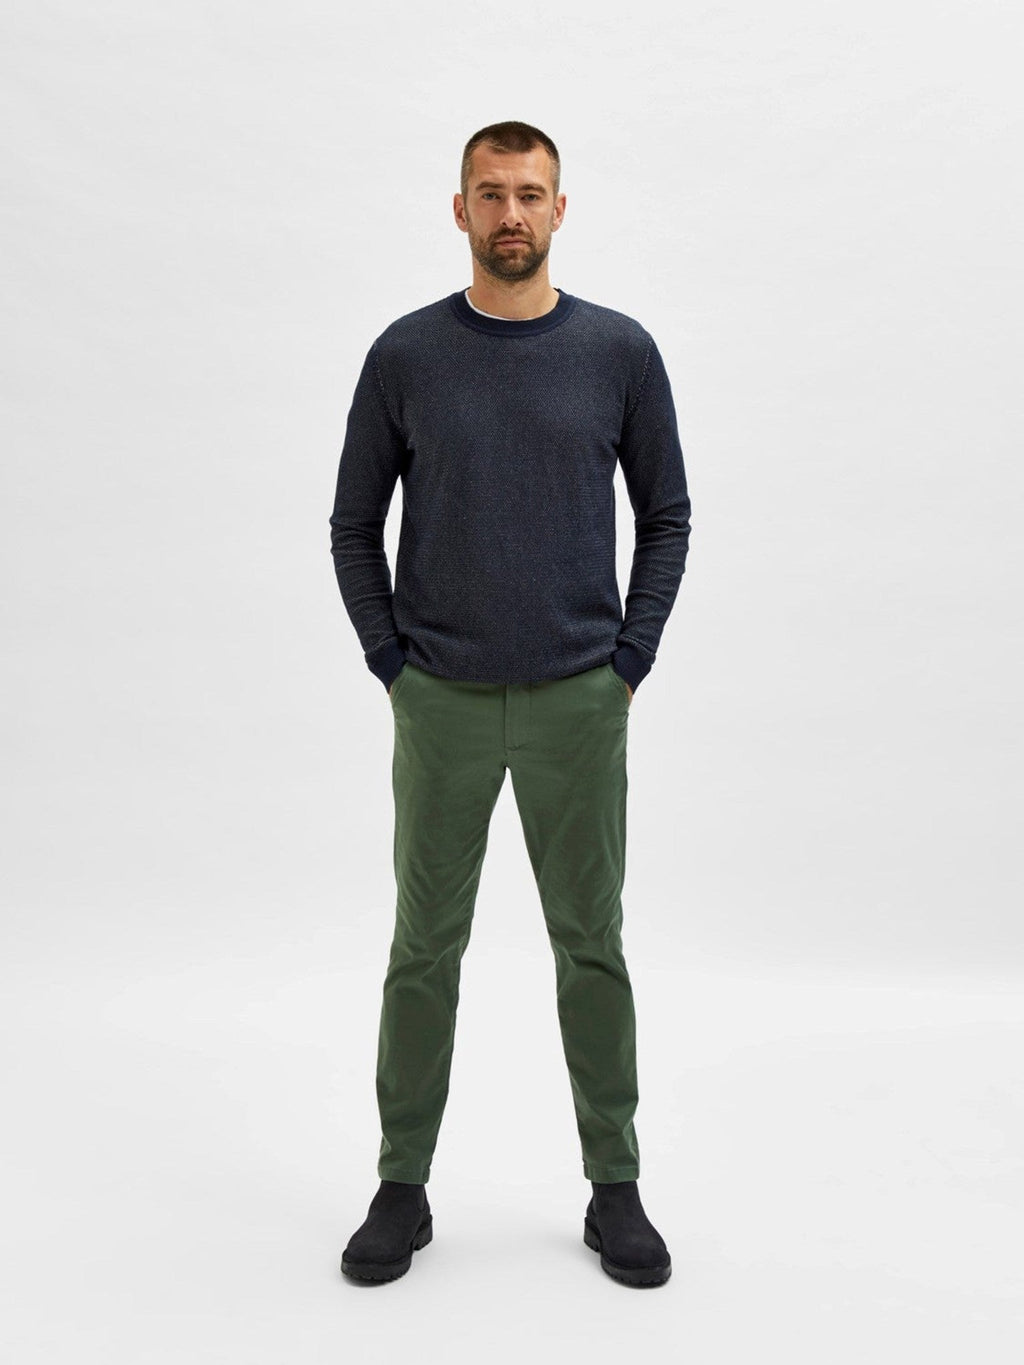 Miles Flex Chino Pants - Bronze Green (organic cotton)